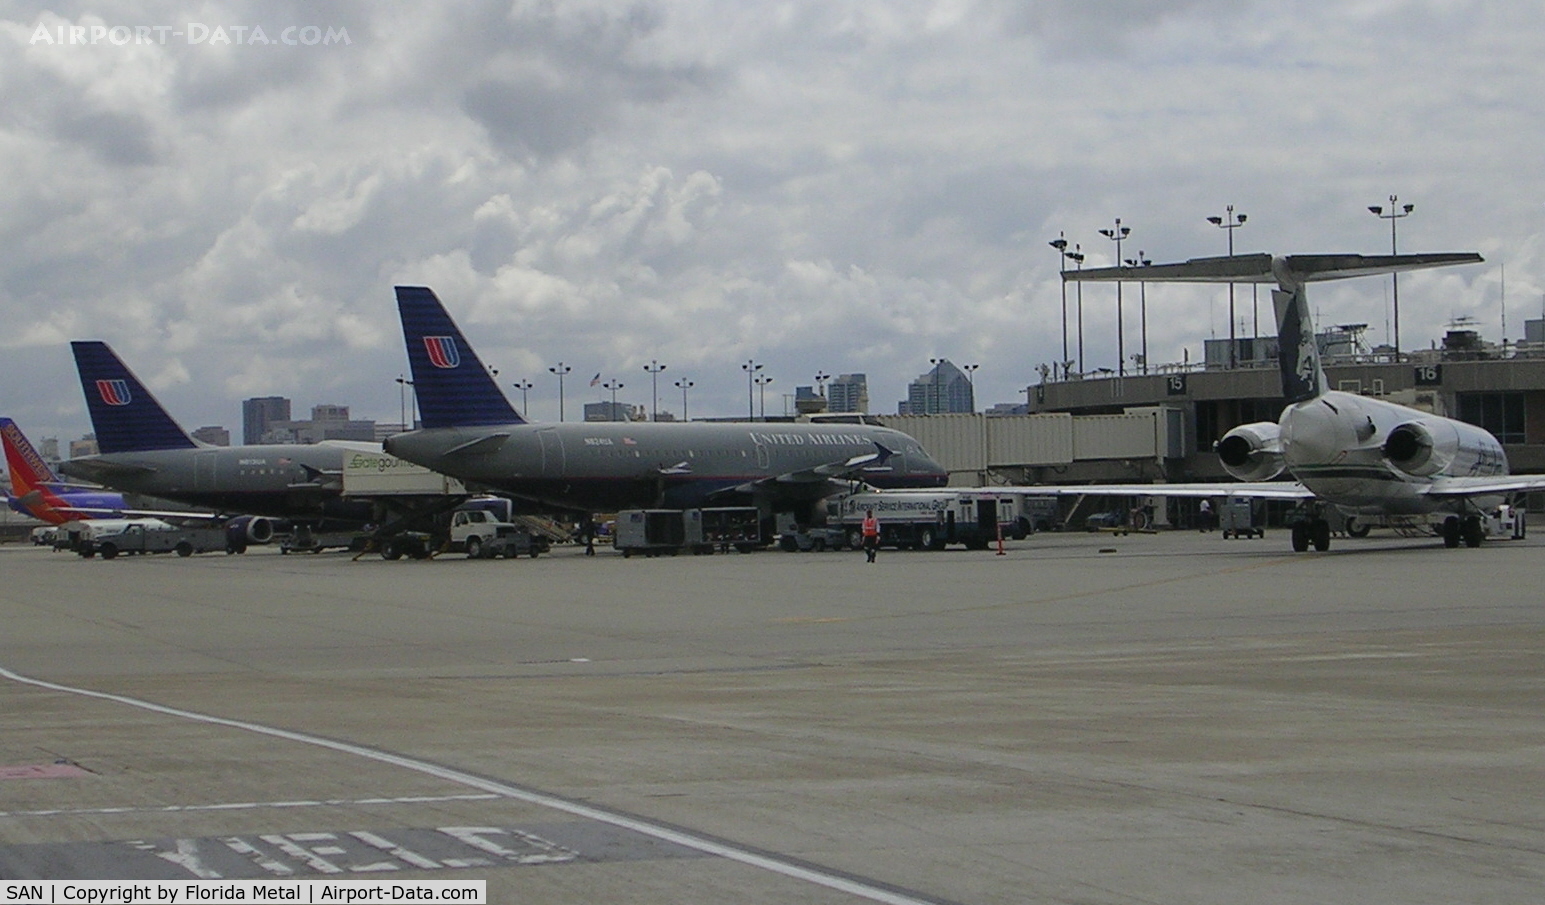 San Diego International Airport (SAN) - Gates at San Diego